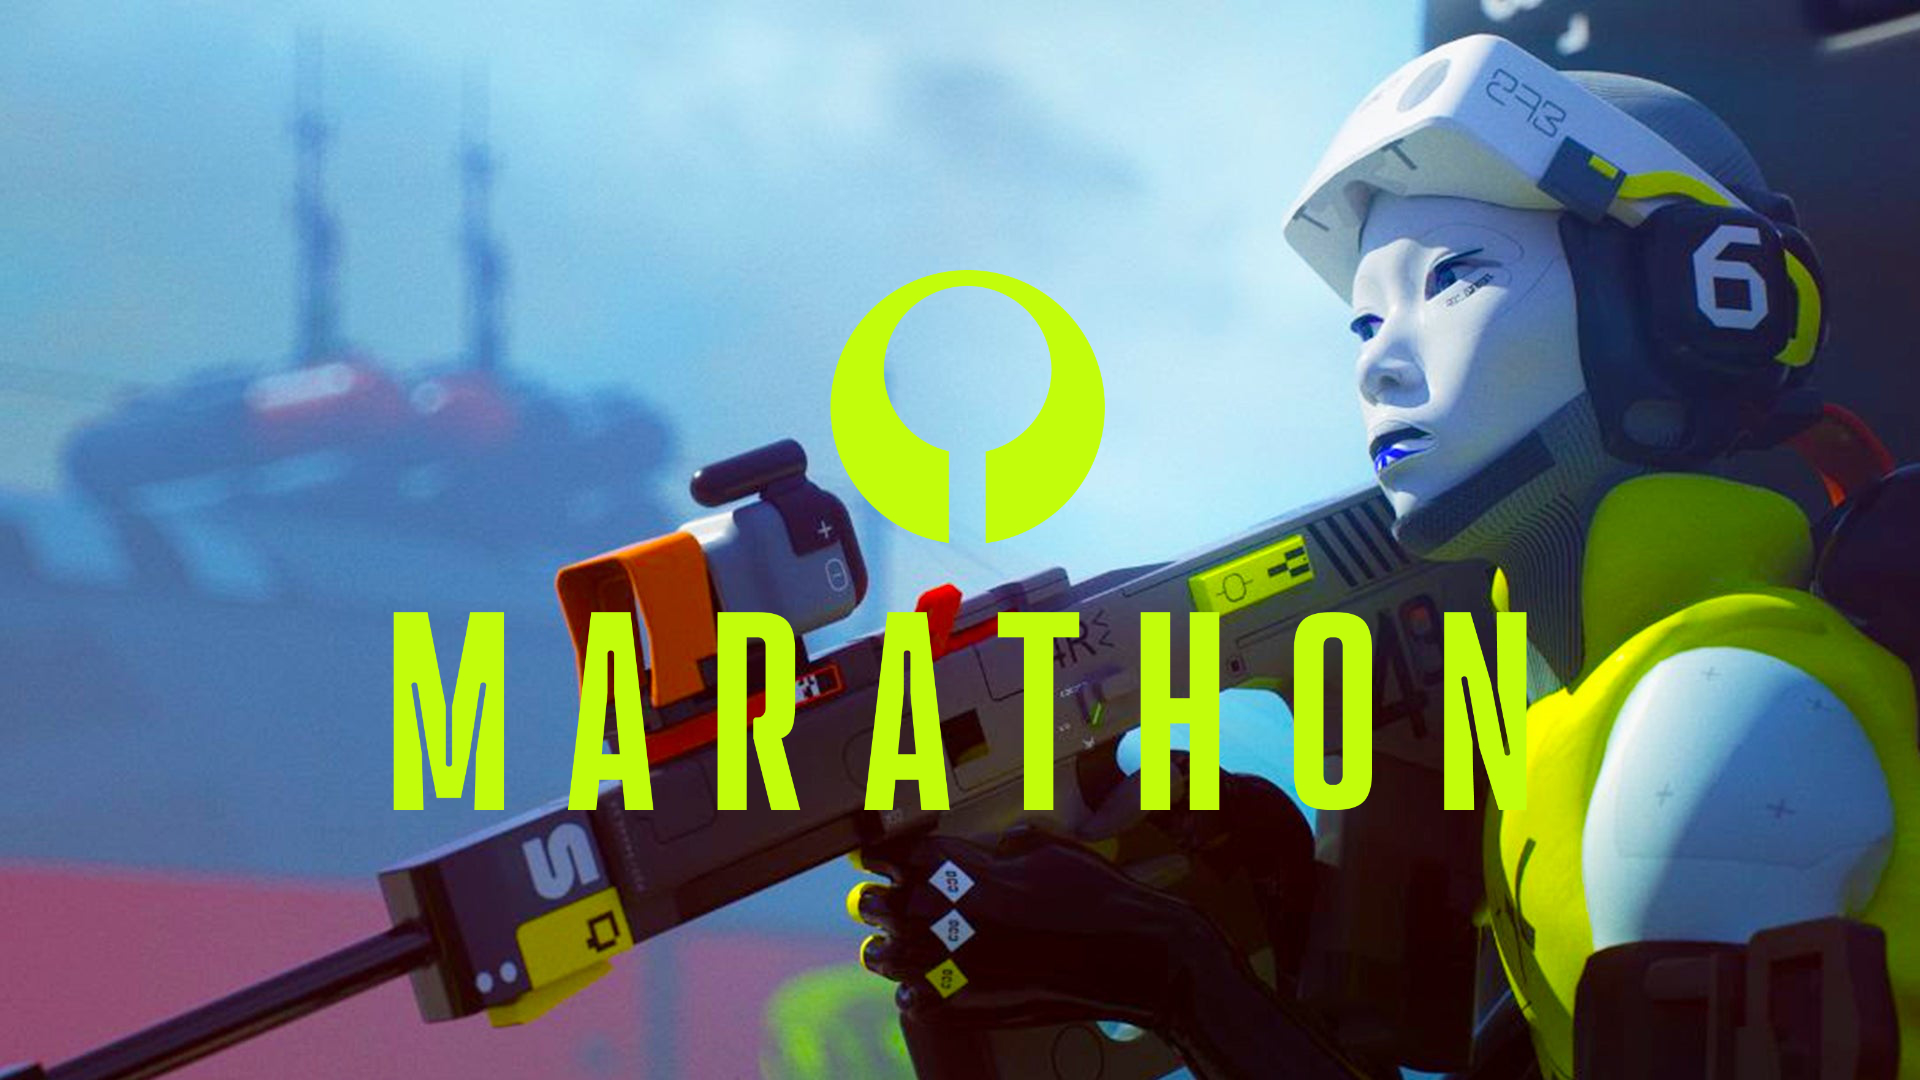 Bungie reveals a new Marathon during PlayStation Showase 2023